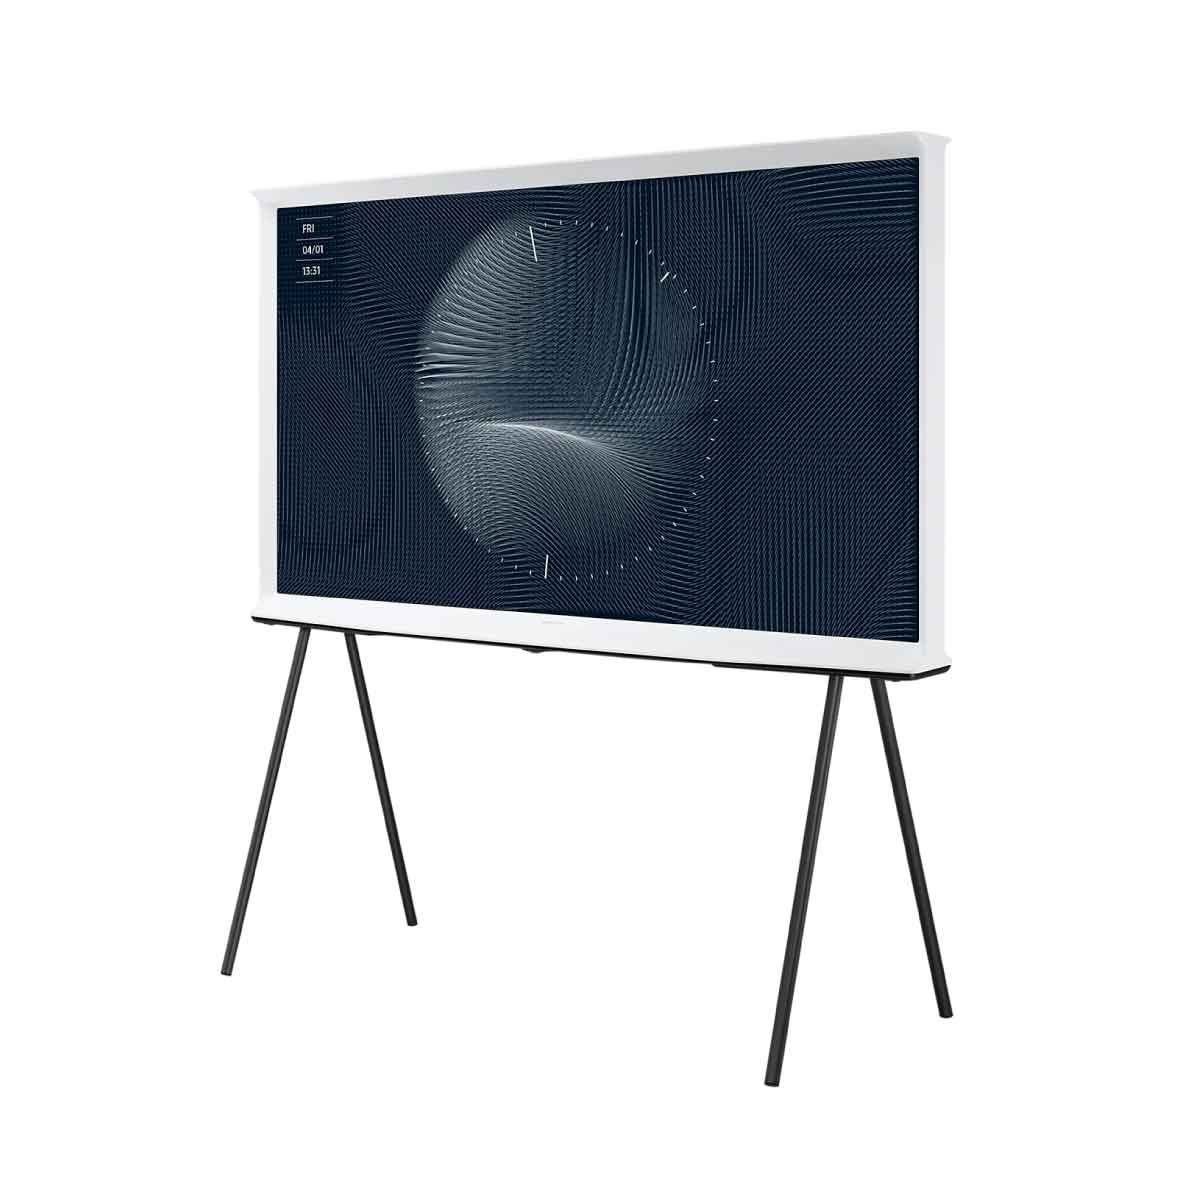 SAMSUNG The Serif QLED Smart TV 4K รุ่น QA55LS01BAKXXT สมาร์ททีวี 55 นิ้ว ปี 2022